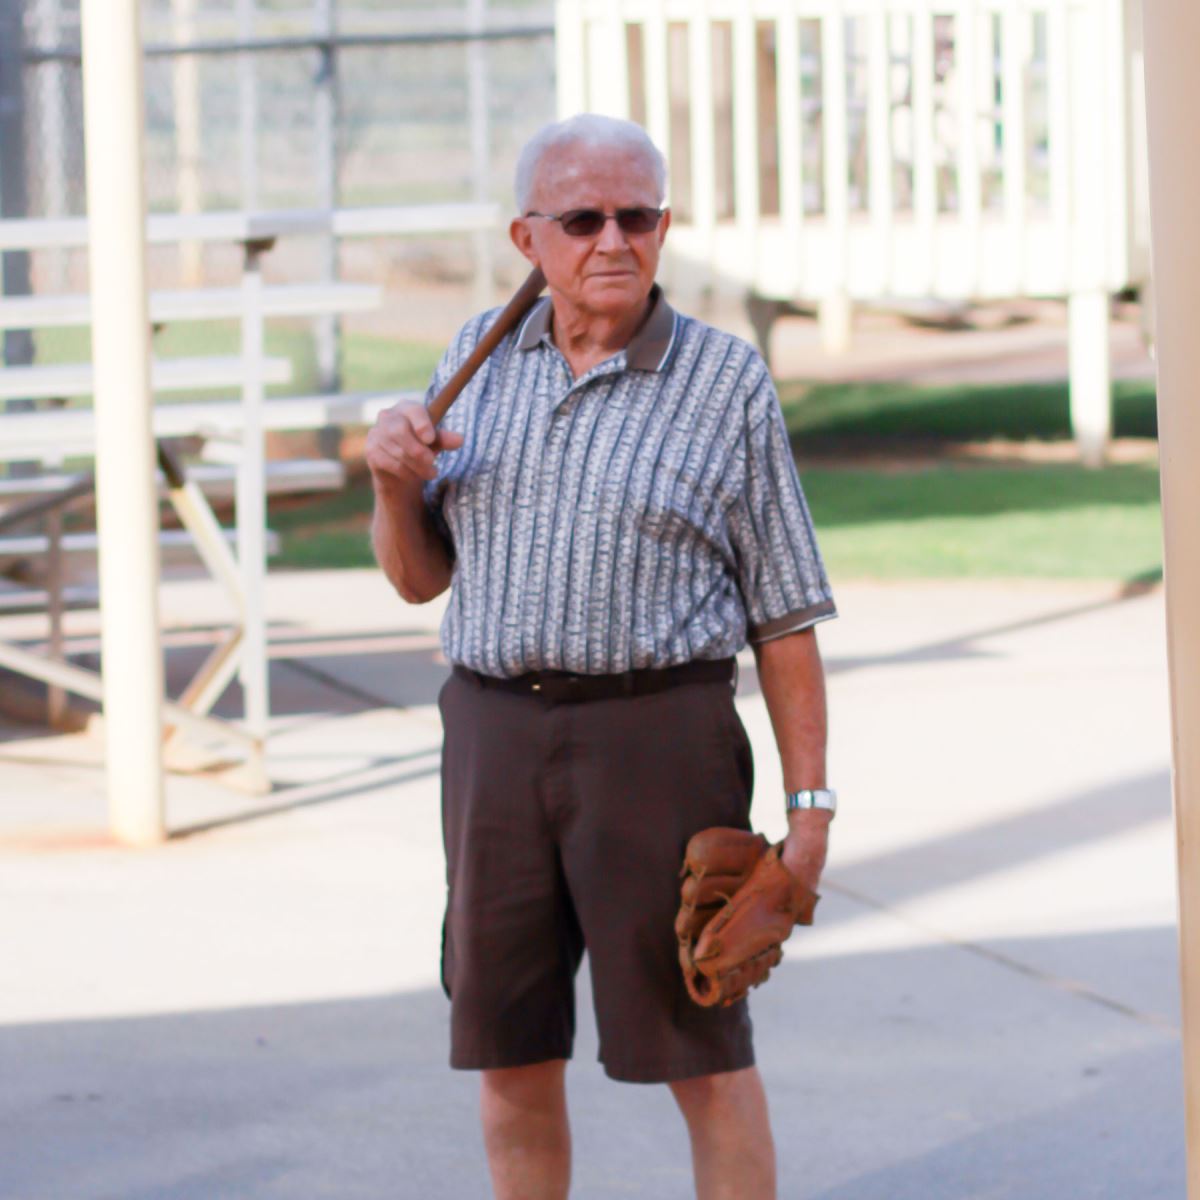 Lowell Elliot holding a baseball bat and glove